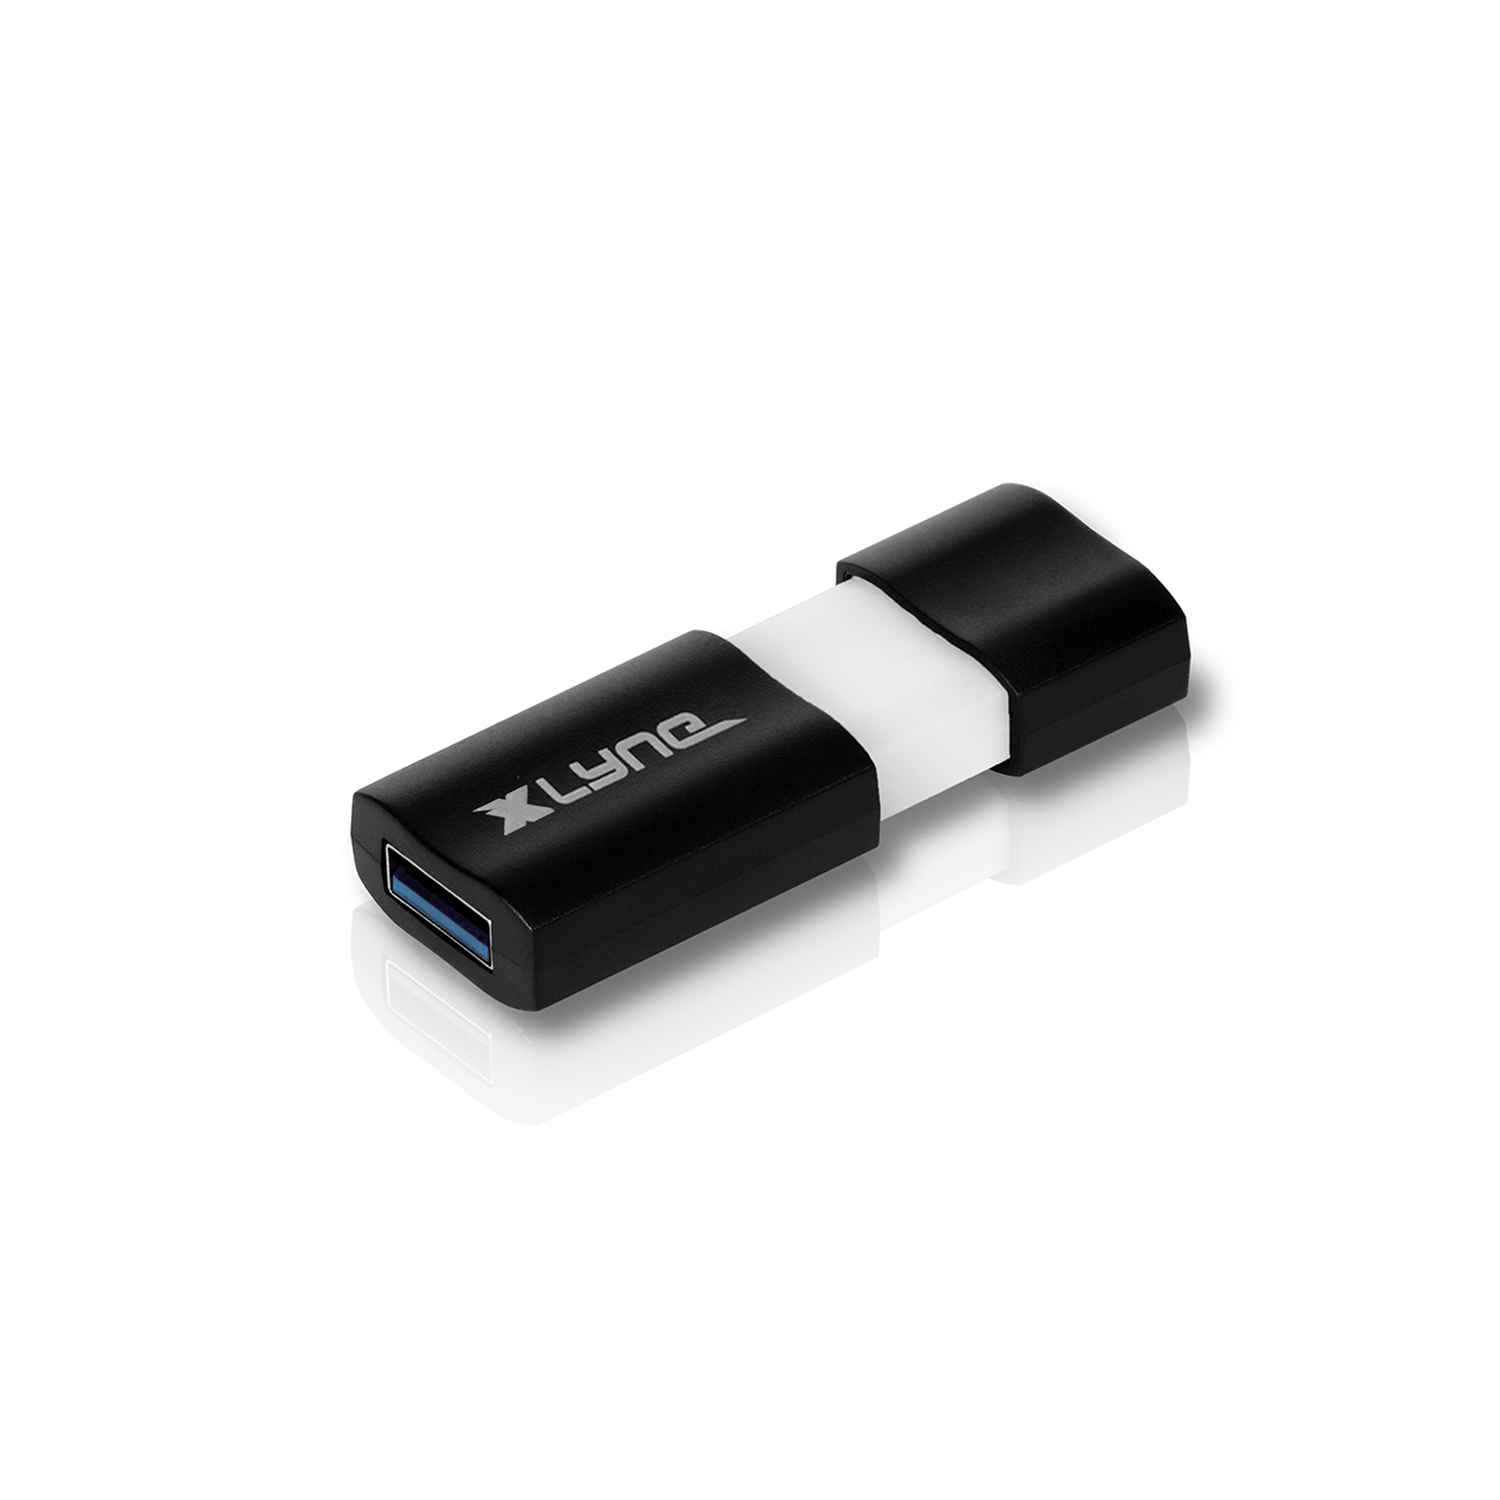 USB 512 - XLYNE 3.0 GB Stick USB